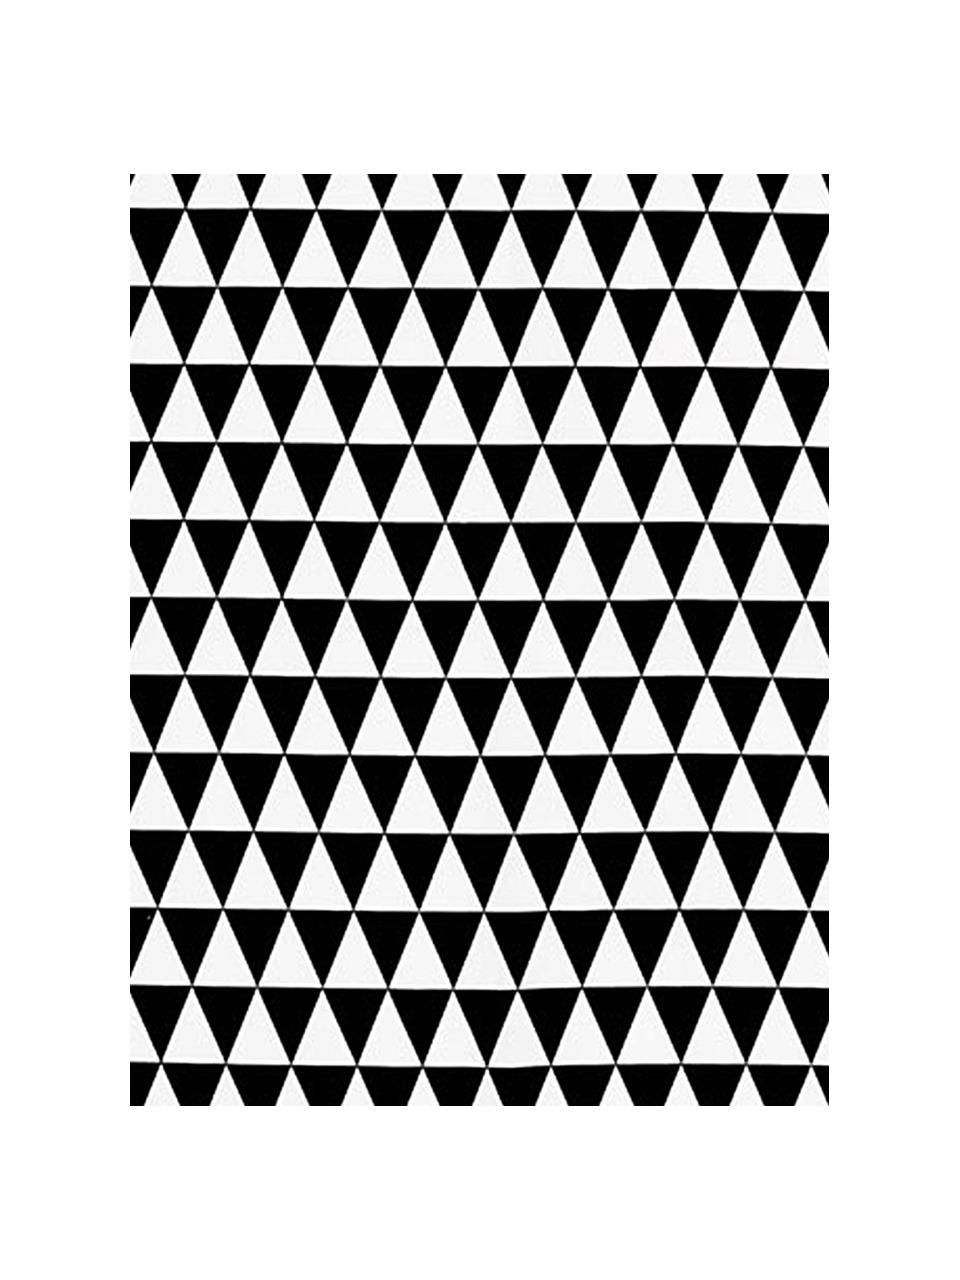 Sponsdoek rol Dreieck, 70% Cellulose, 30% katoen, Wit, zwart, B 24 x L 25 cm